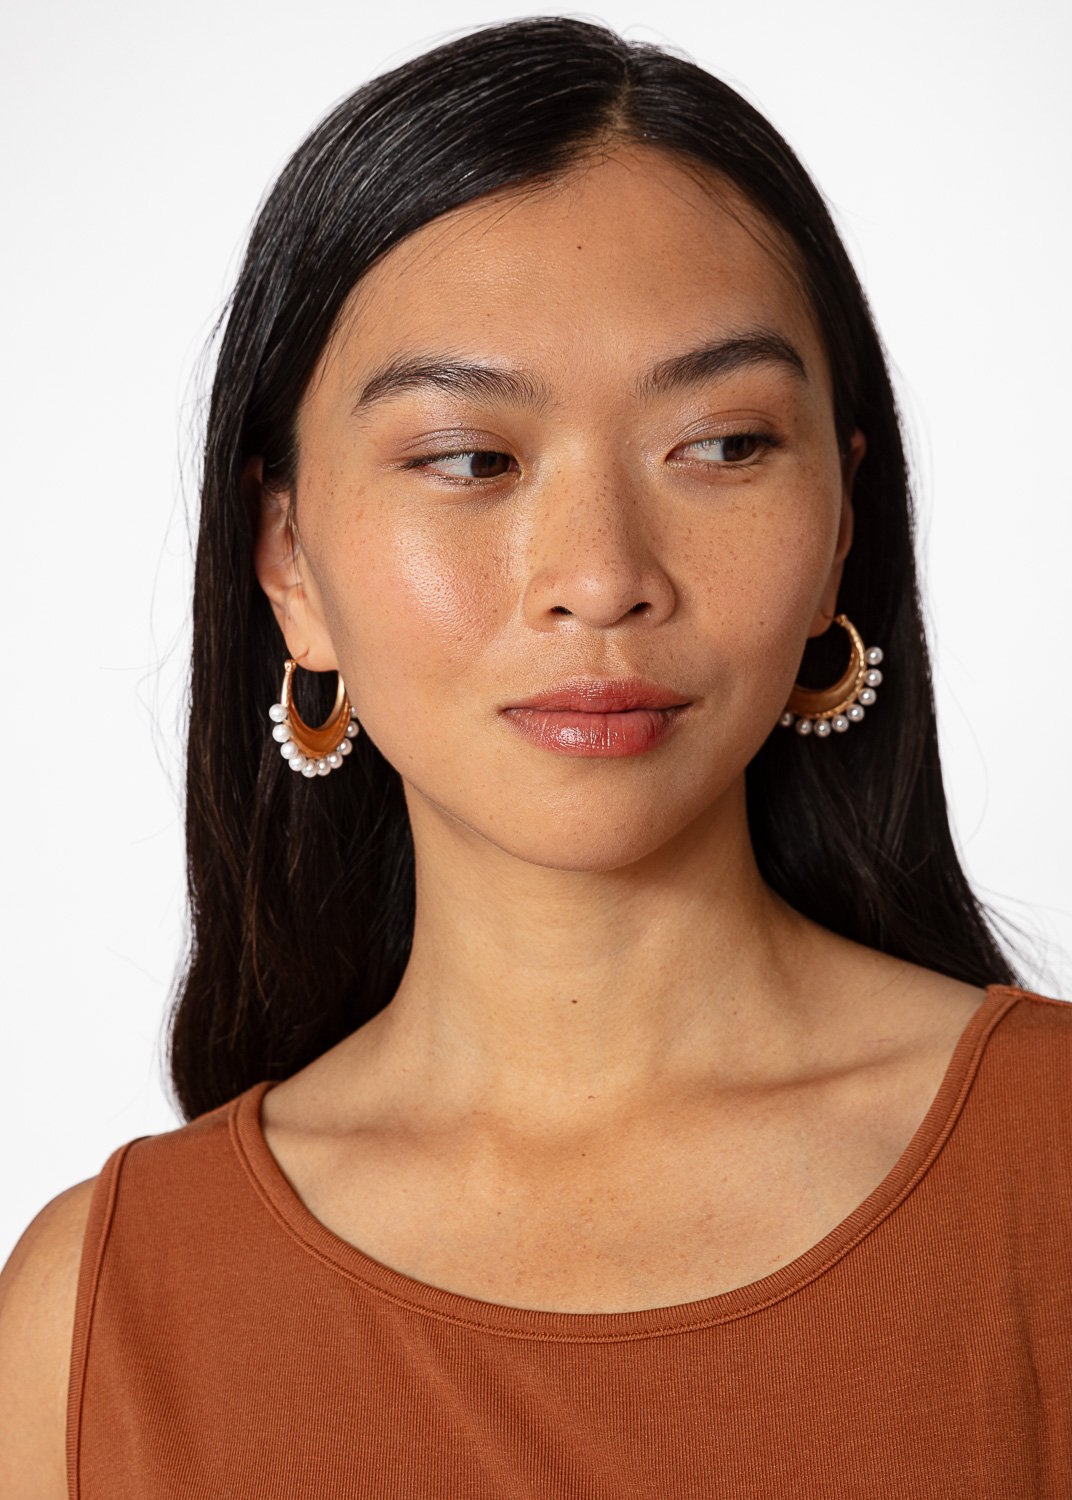 Shiny gold coloured earrings